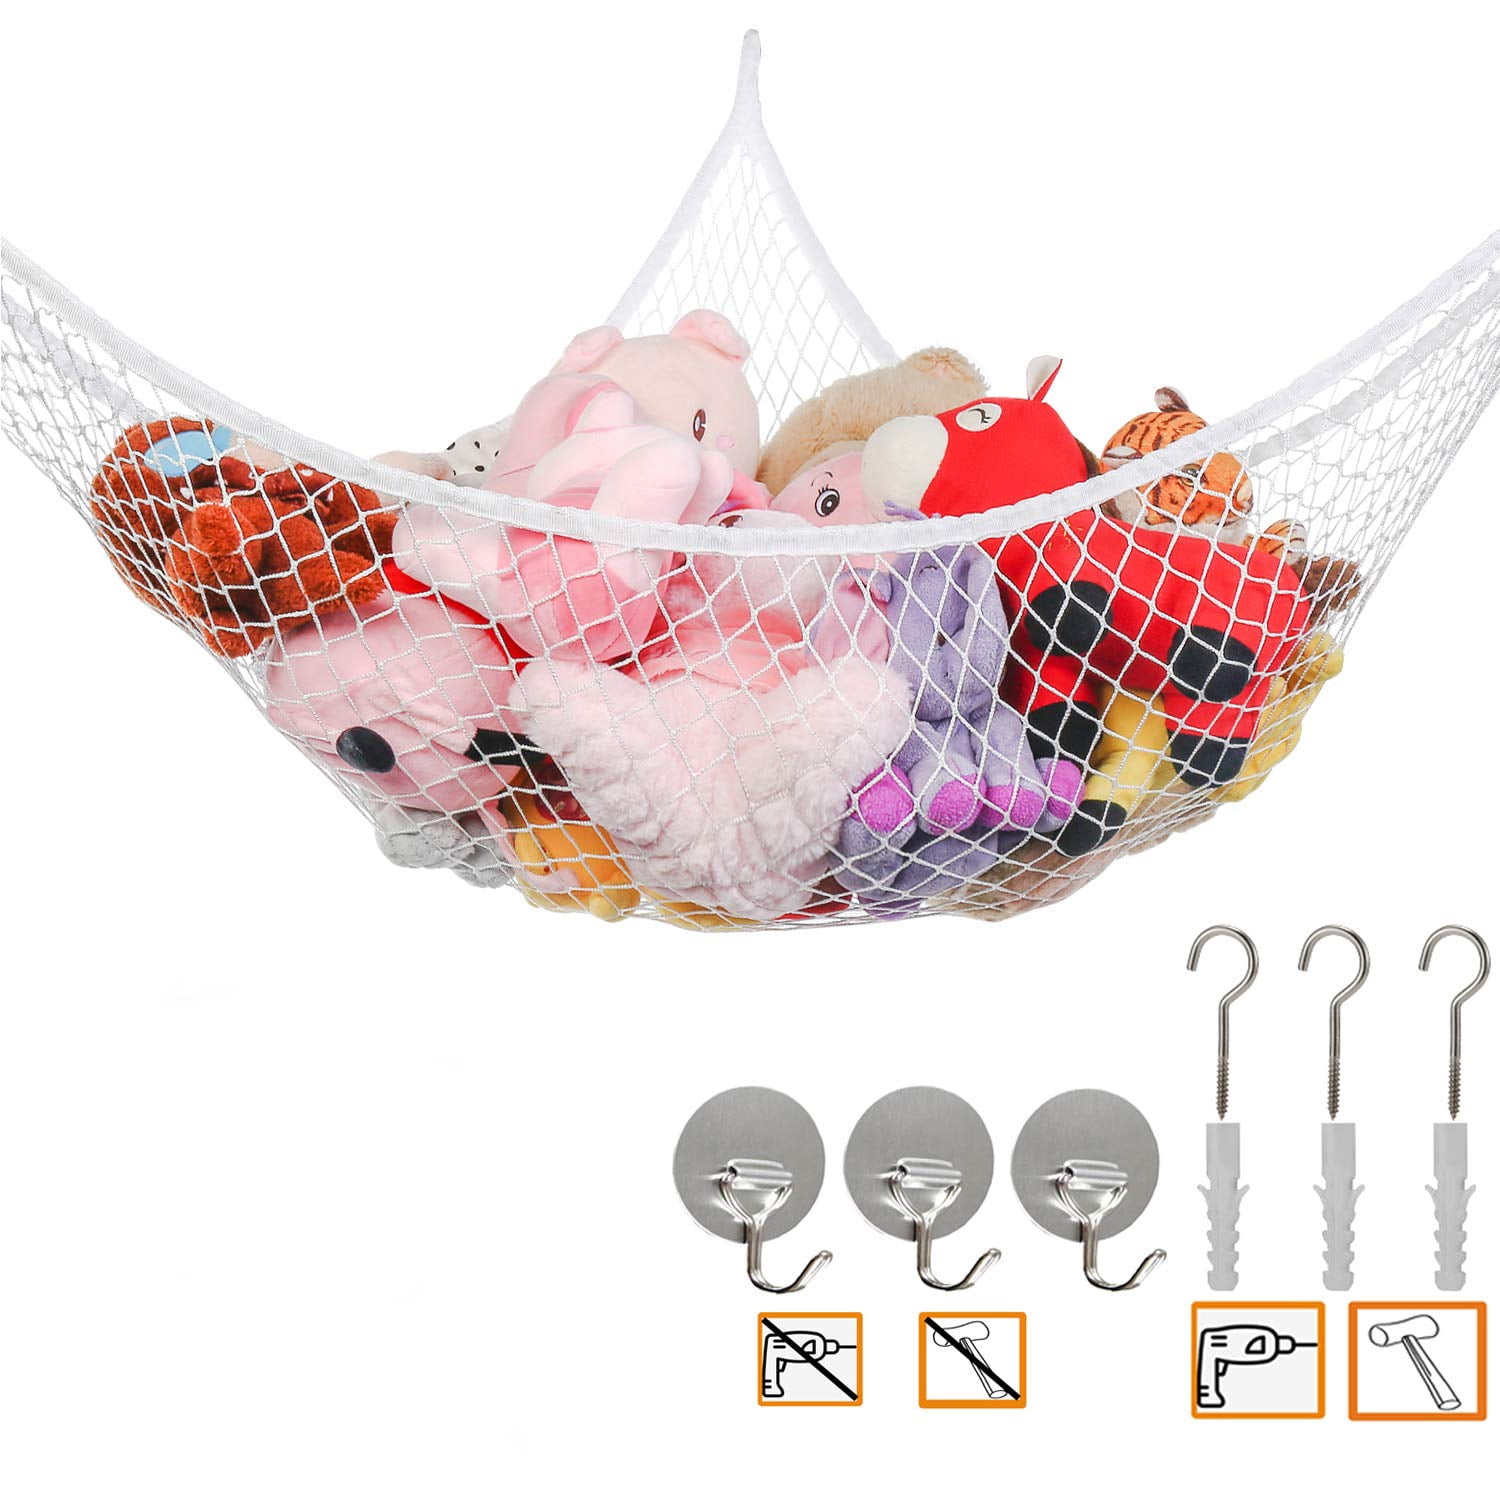 Jumbo Toy Hammock Net Organize Stuffed Animals And Kids Storage Bath Toys 